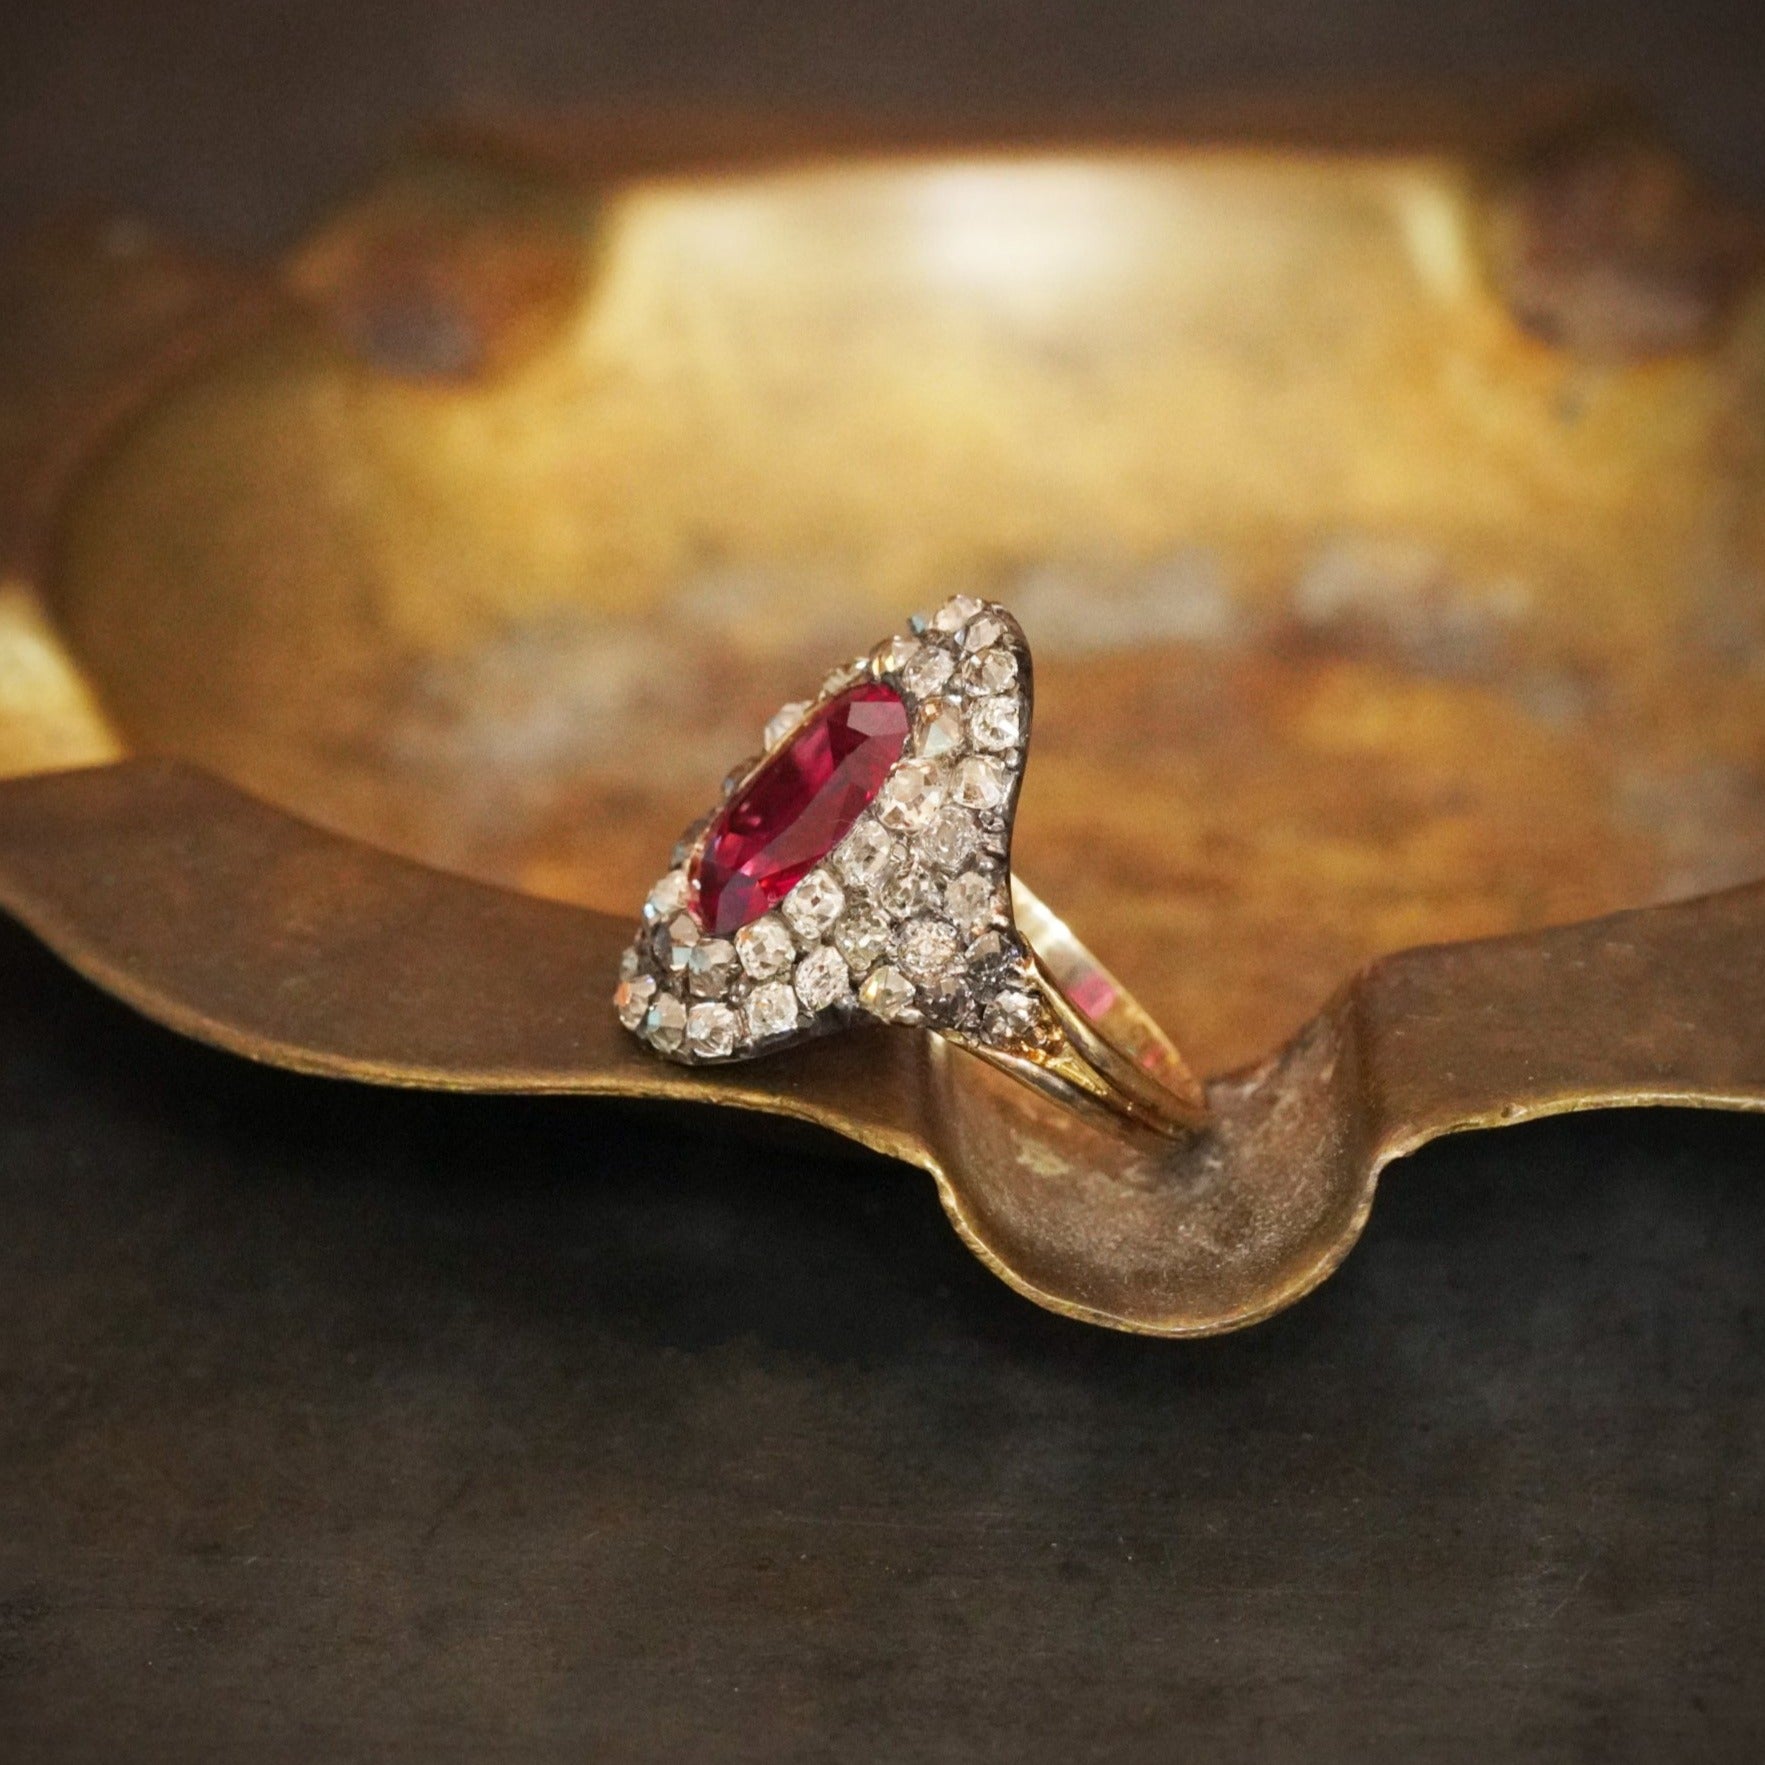 Jogani Exquisite Georgian Era Ring with a Glowing 3.12 CT No Heat Burmese Ruby and Lustrous Table-Cut Diamonds 